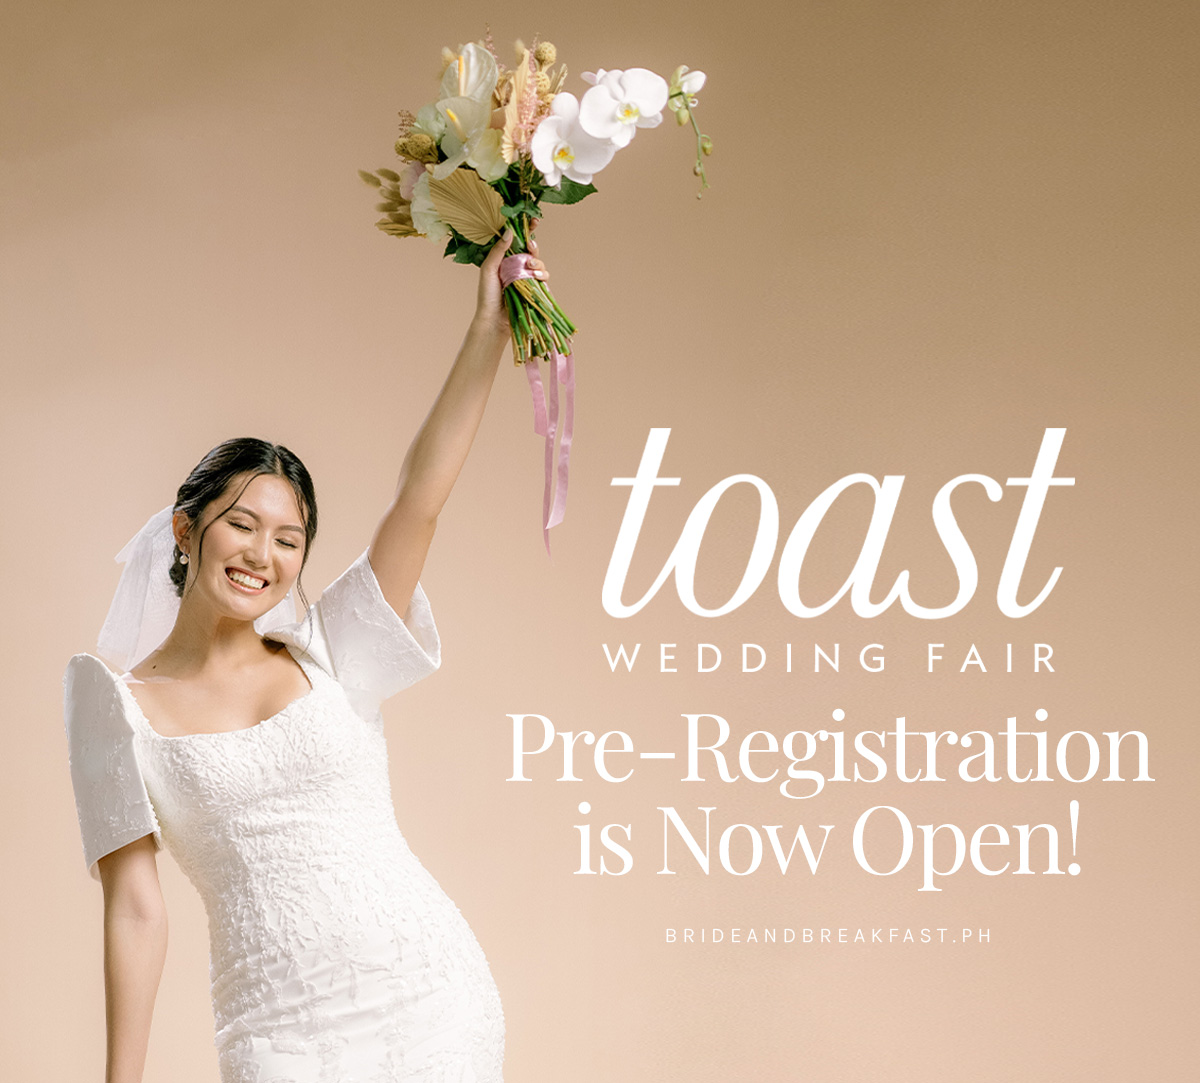 Toast Wedding Fair Pre-Registration is Now Open! 